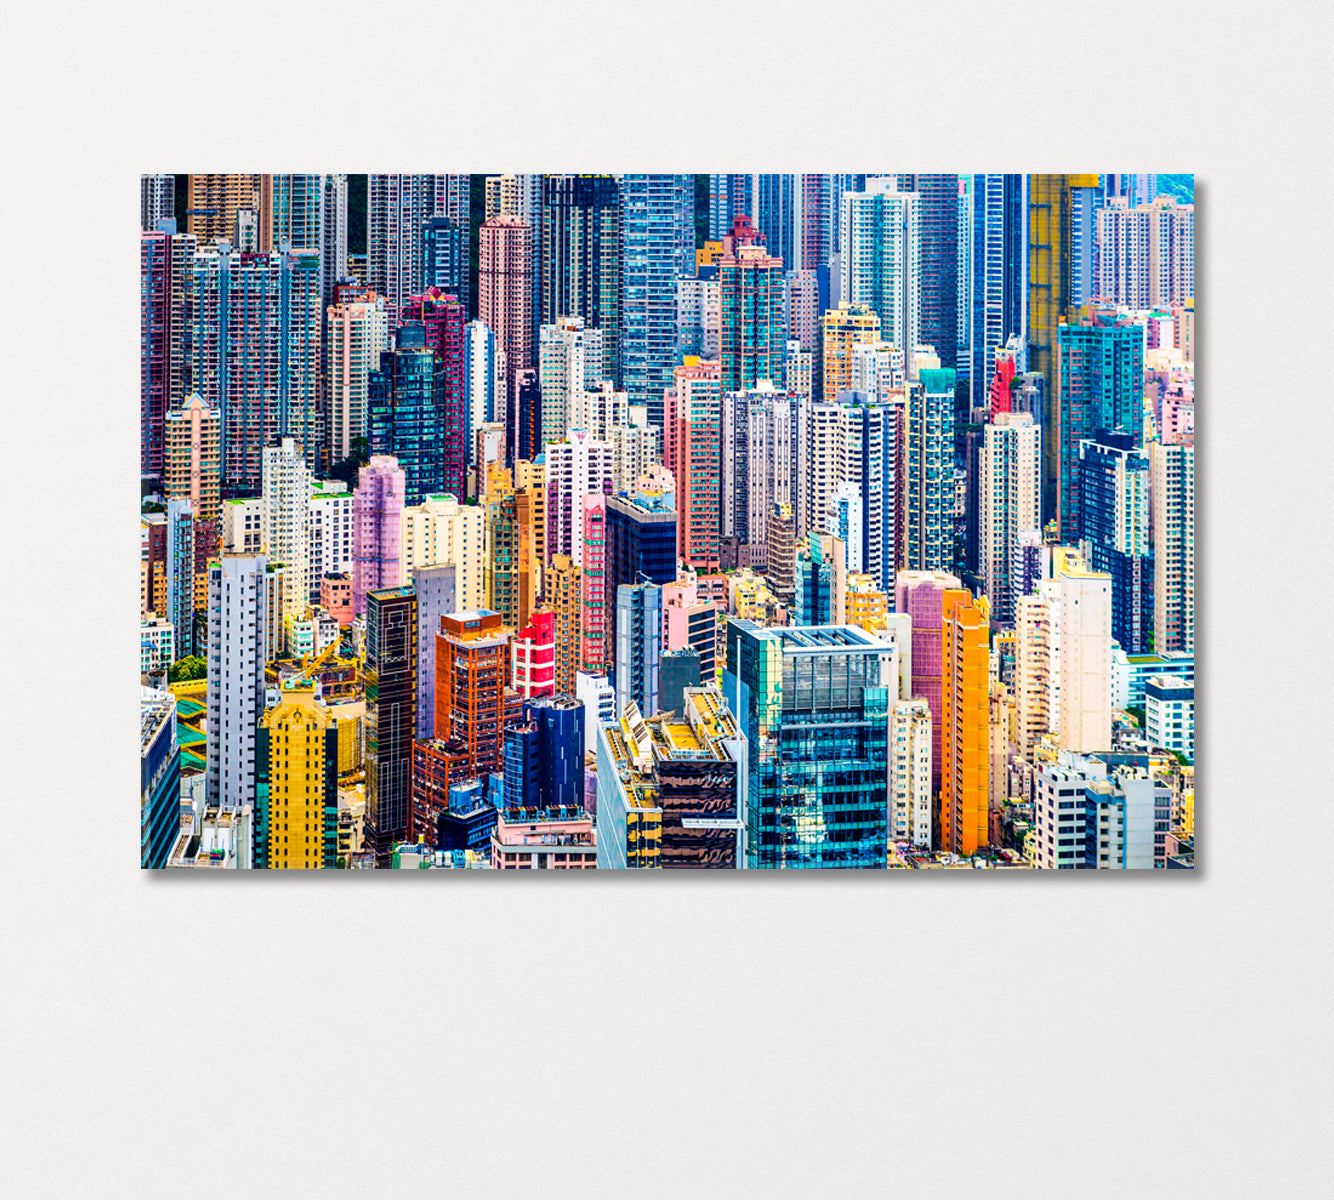 Colorful Hong Kong Skyscrapers Canvas Print-Canvas Print-CetArt-1 Panel-24x16 inches-CetArt